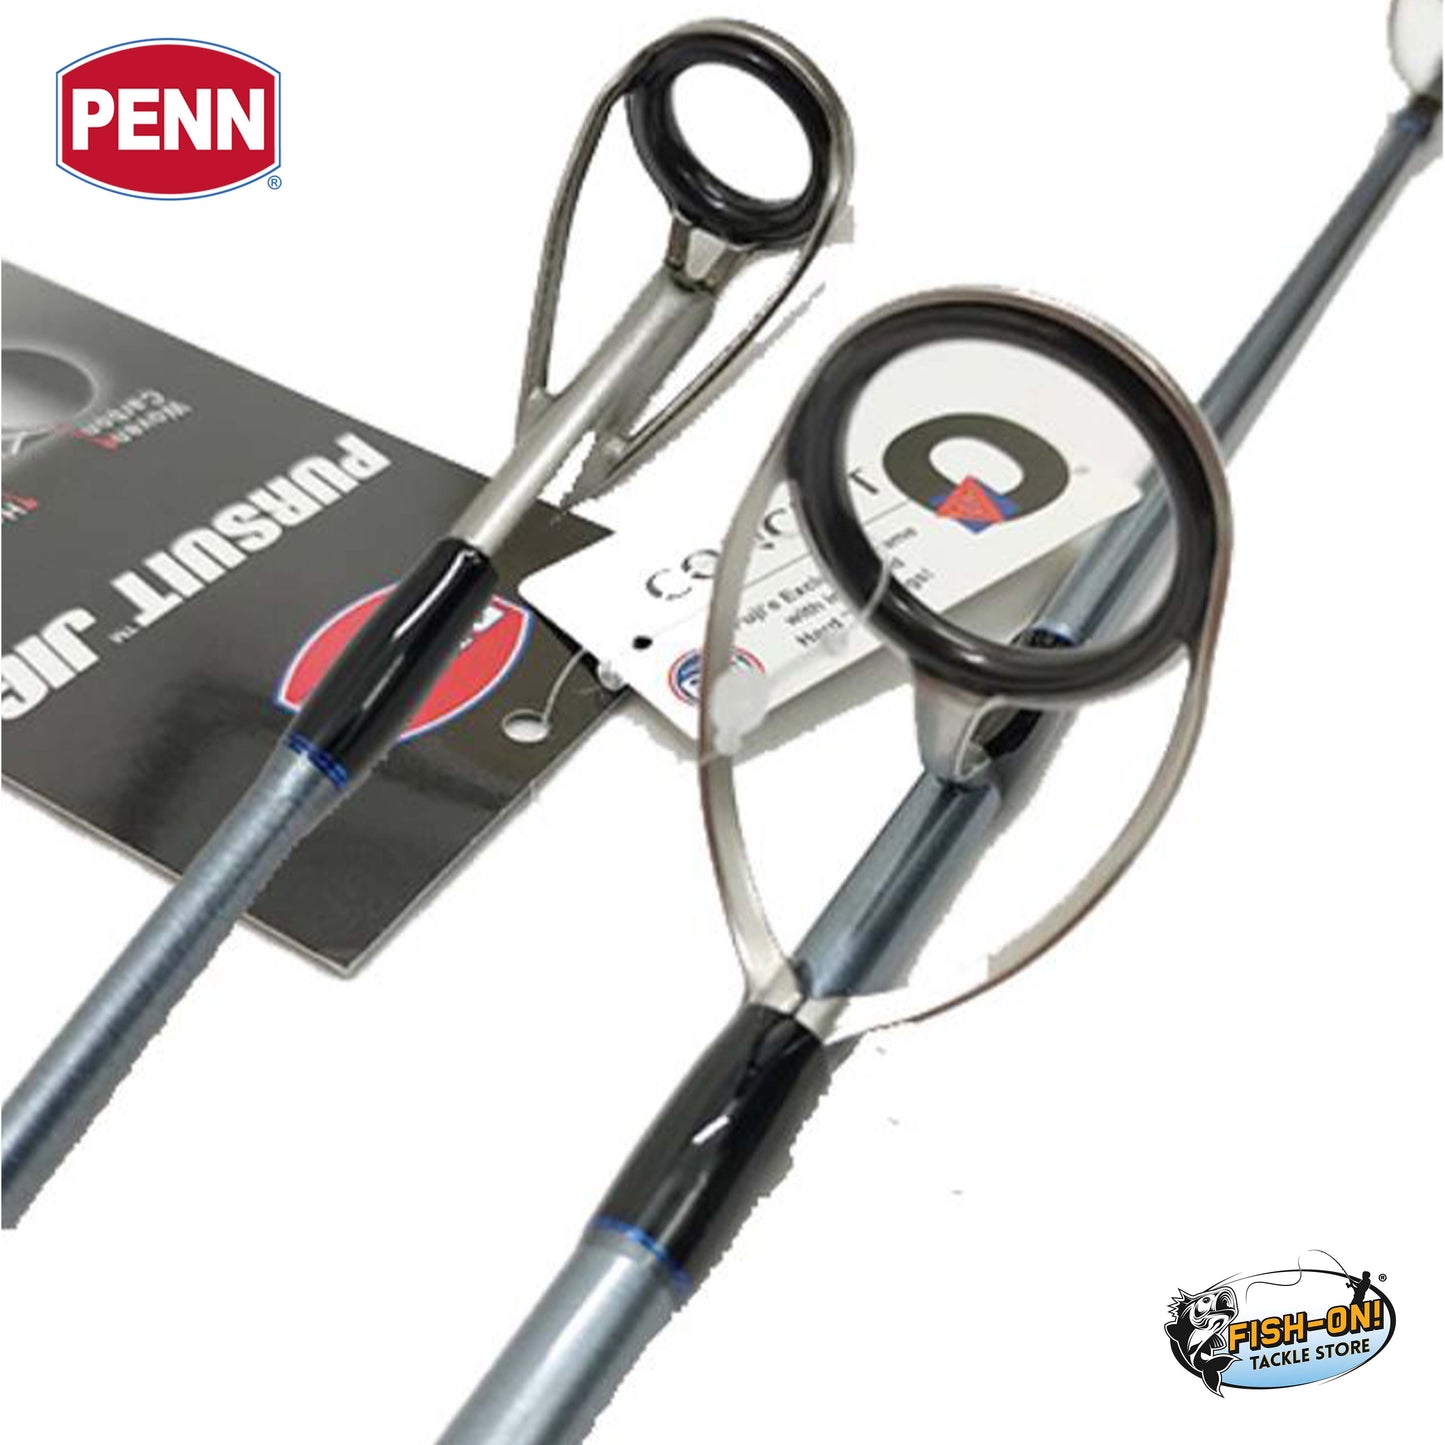 Penn Pursuit Jigging Rod